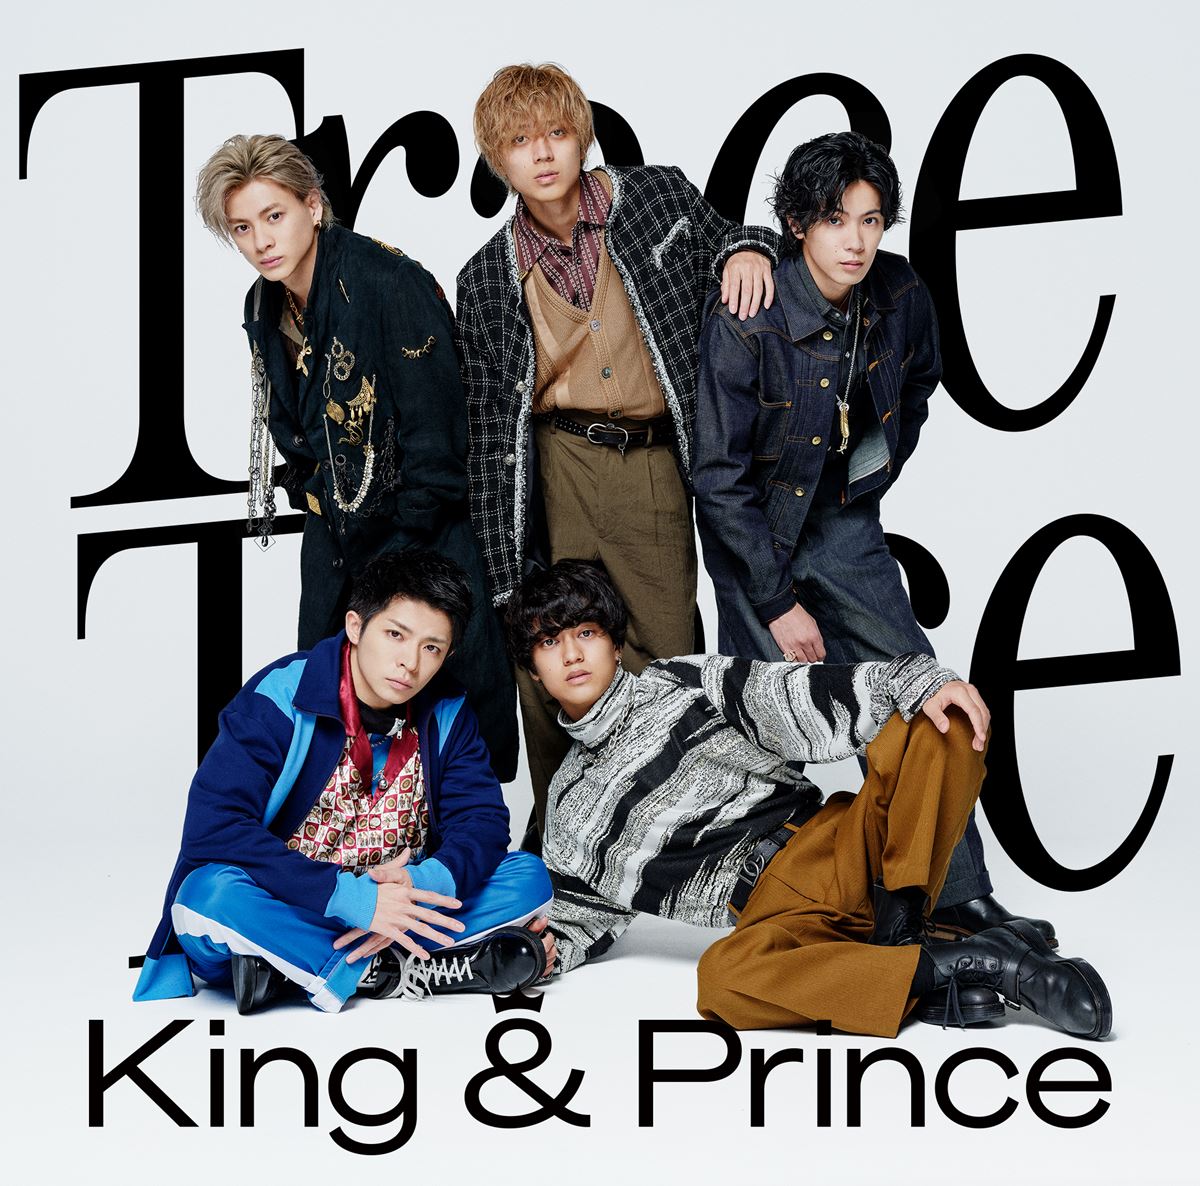 King & Prince、新シングル『TraceTrace』ジャケ写公開 初回盤Bに様々